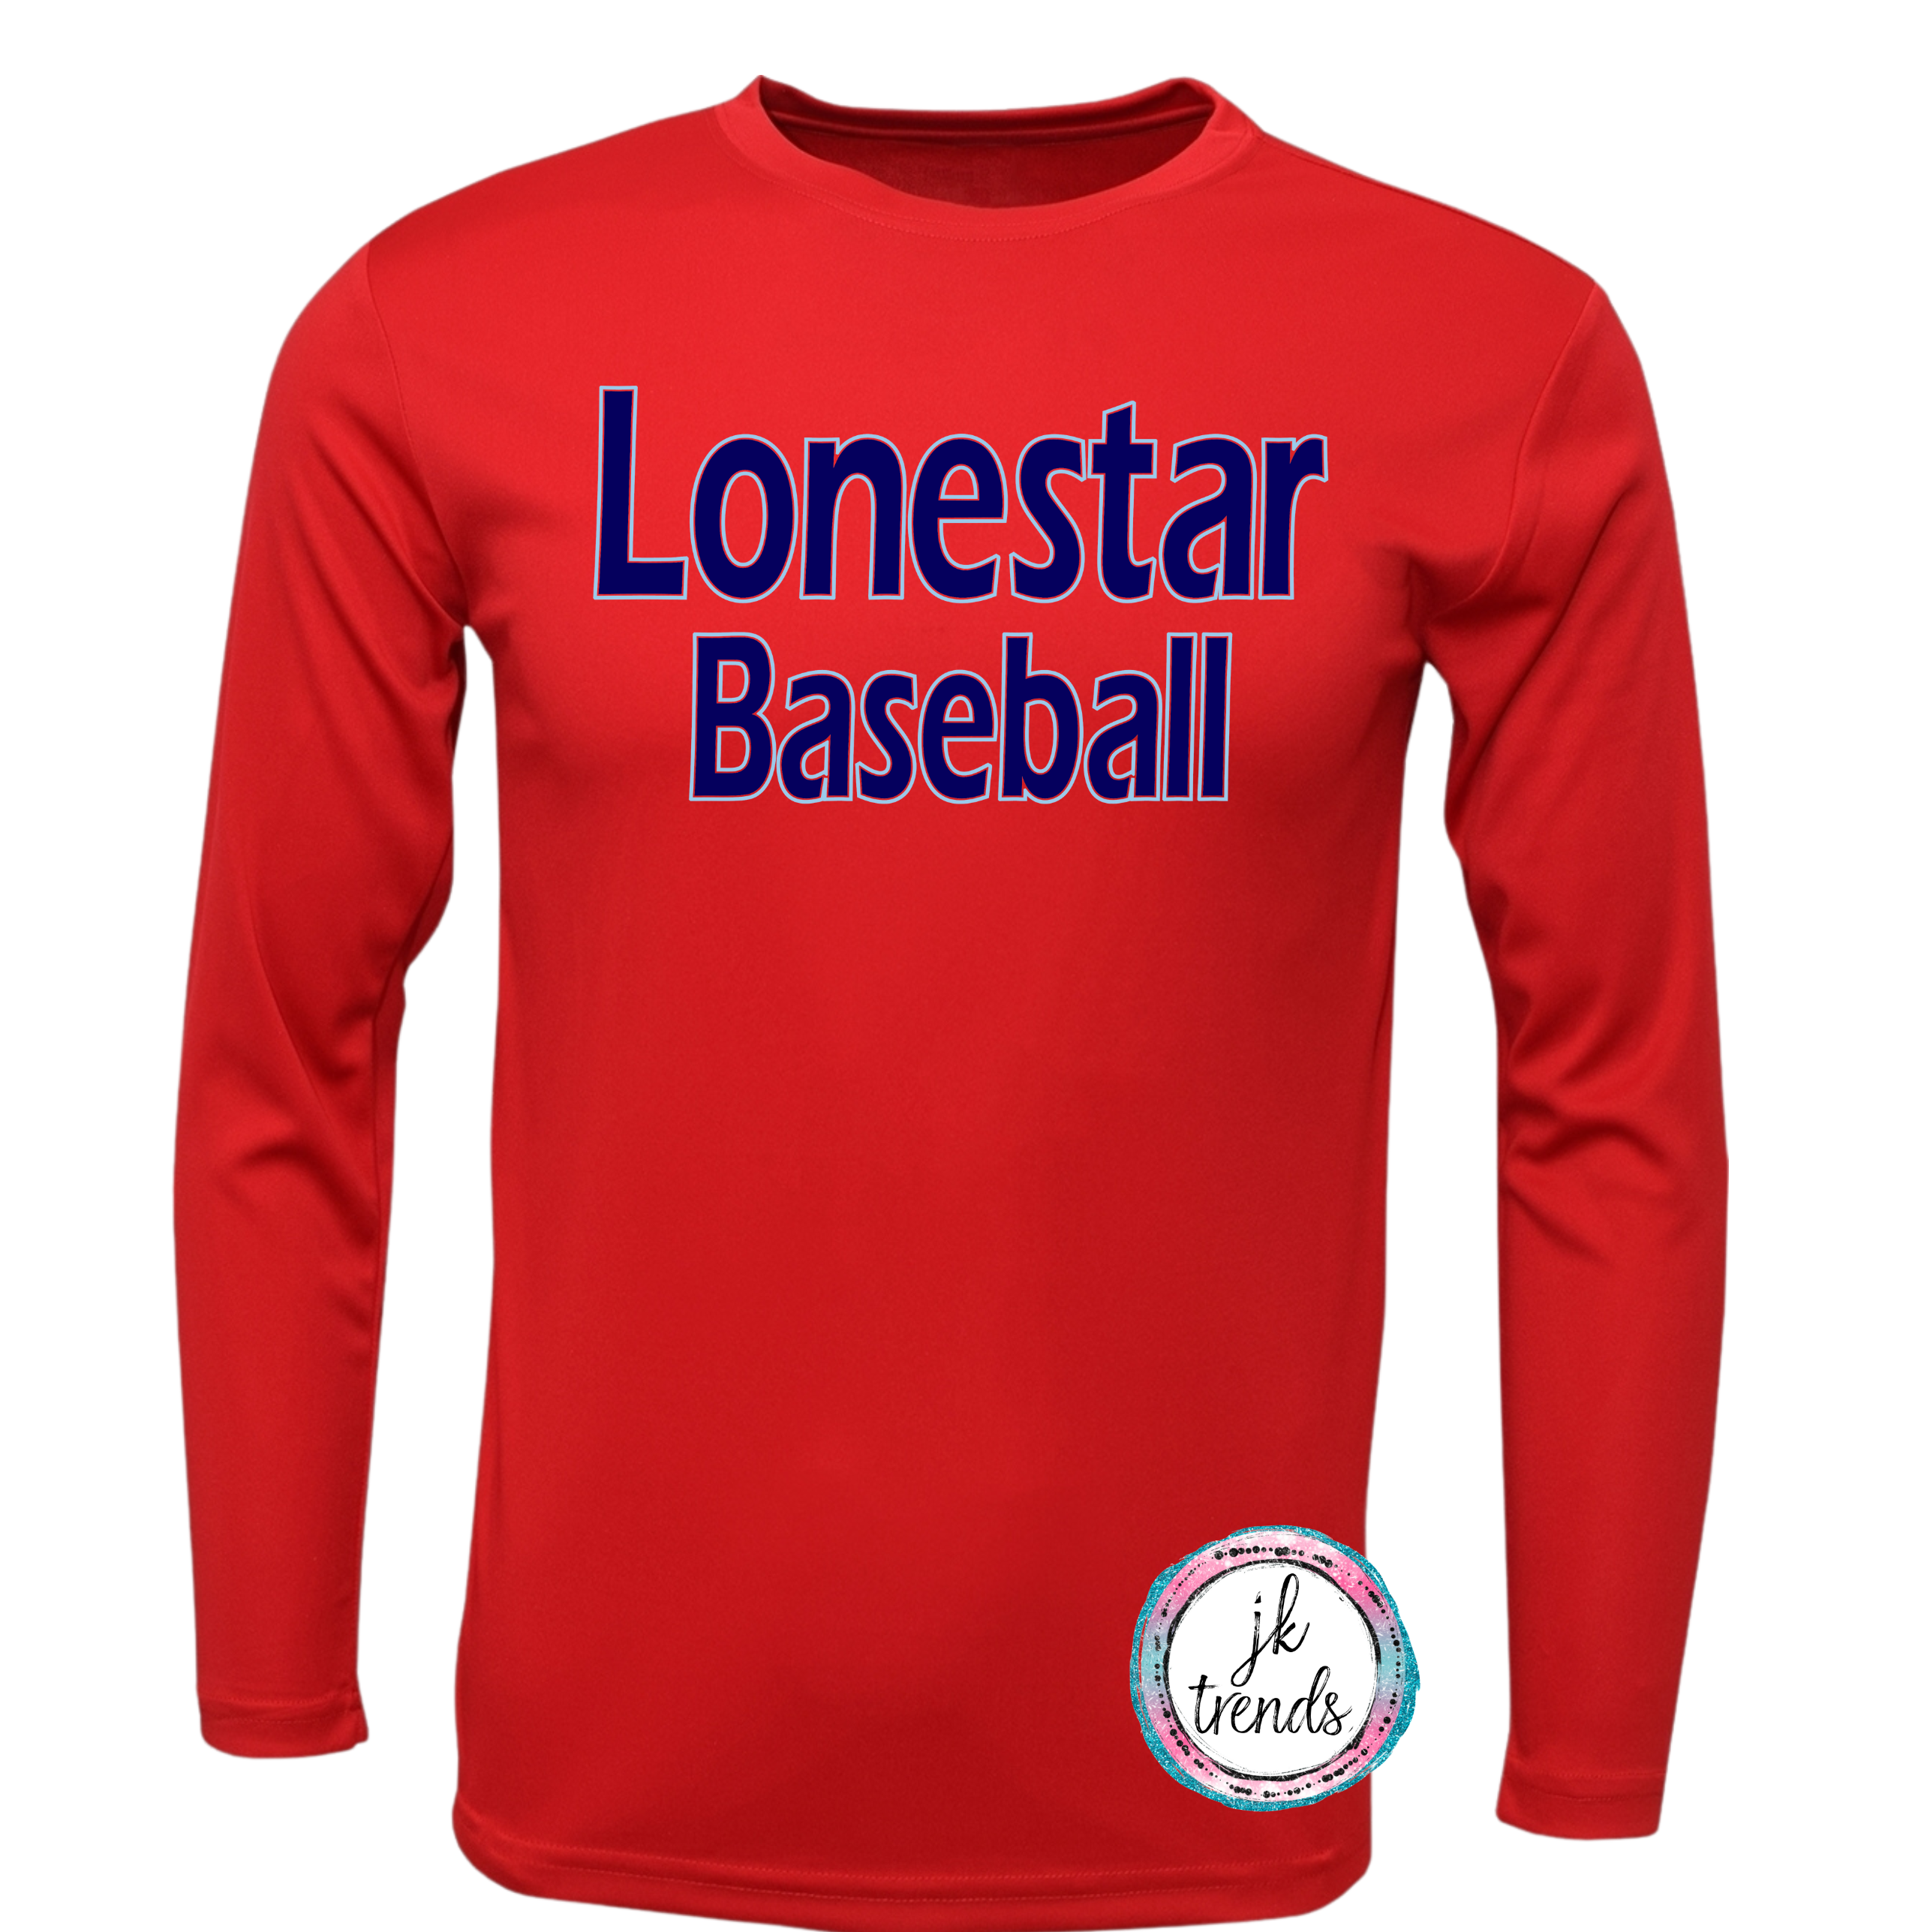 Lonestar Baseball Youth and Adult Long Sleeve Dri-Fit